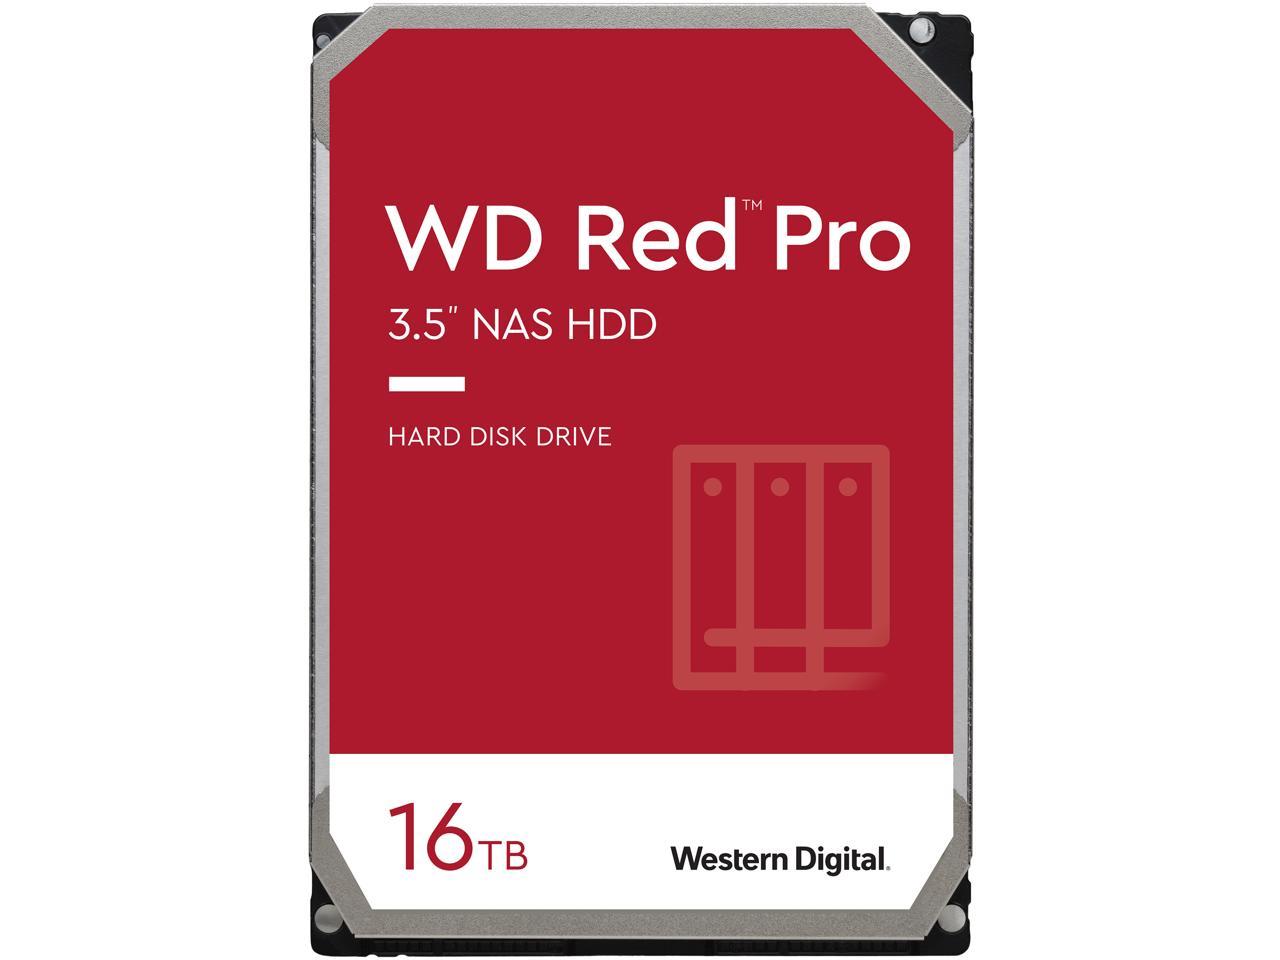 16TB WD Red Pro NAS Hard Drive at Newegg $240